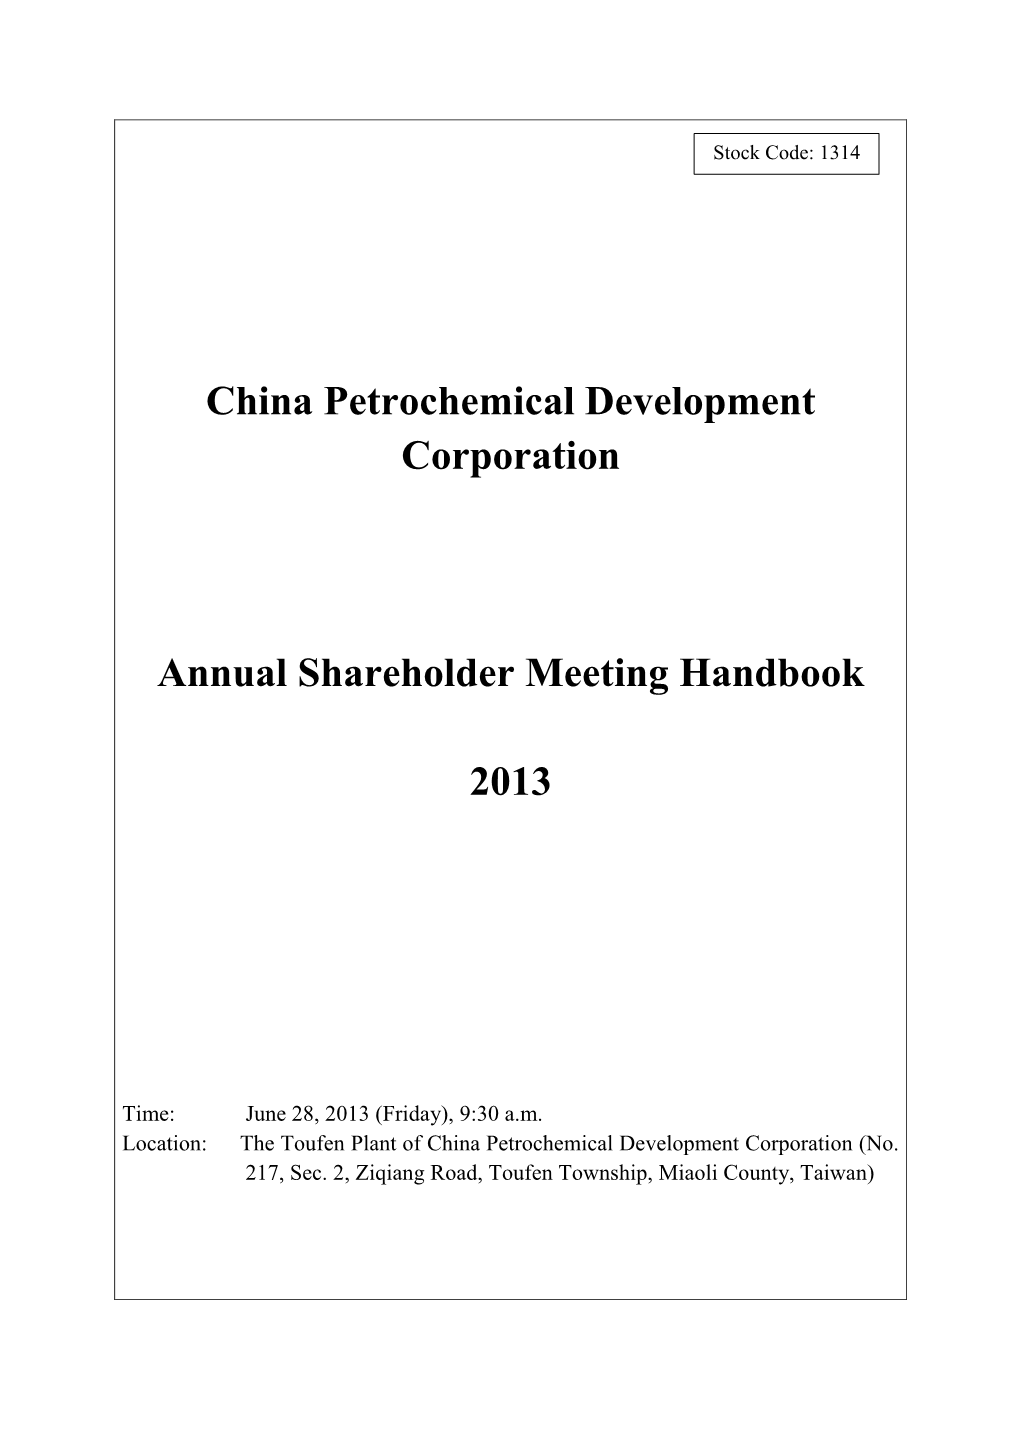 China Petrochemical Development Corporation Annual Shareholder